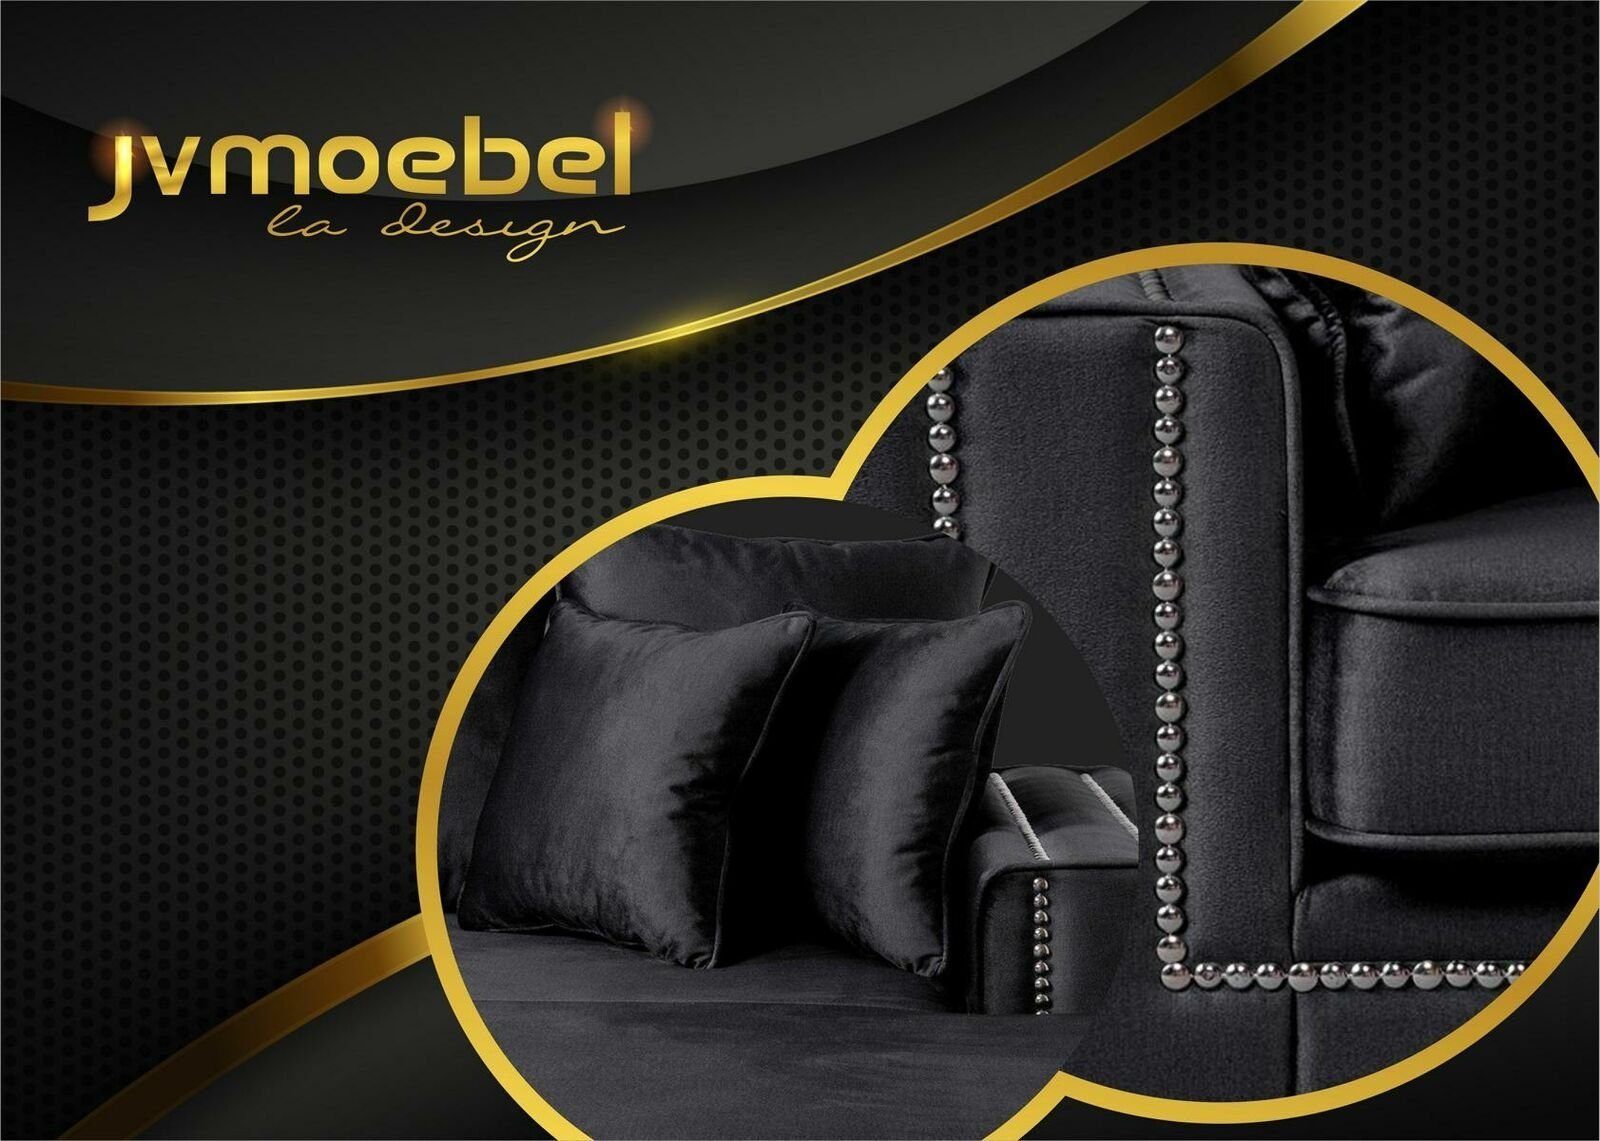 Textil Ecksofa Ecksofa, Design Polster Luxus Schwarz JVmoebel Couch L-form Wohnlandschaft